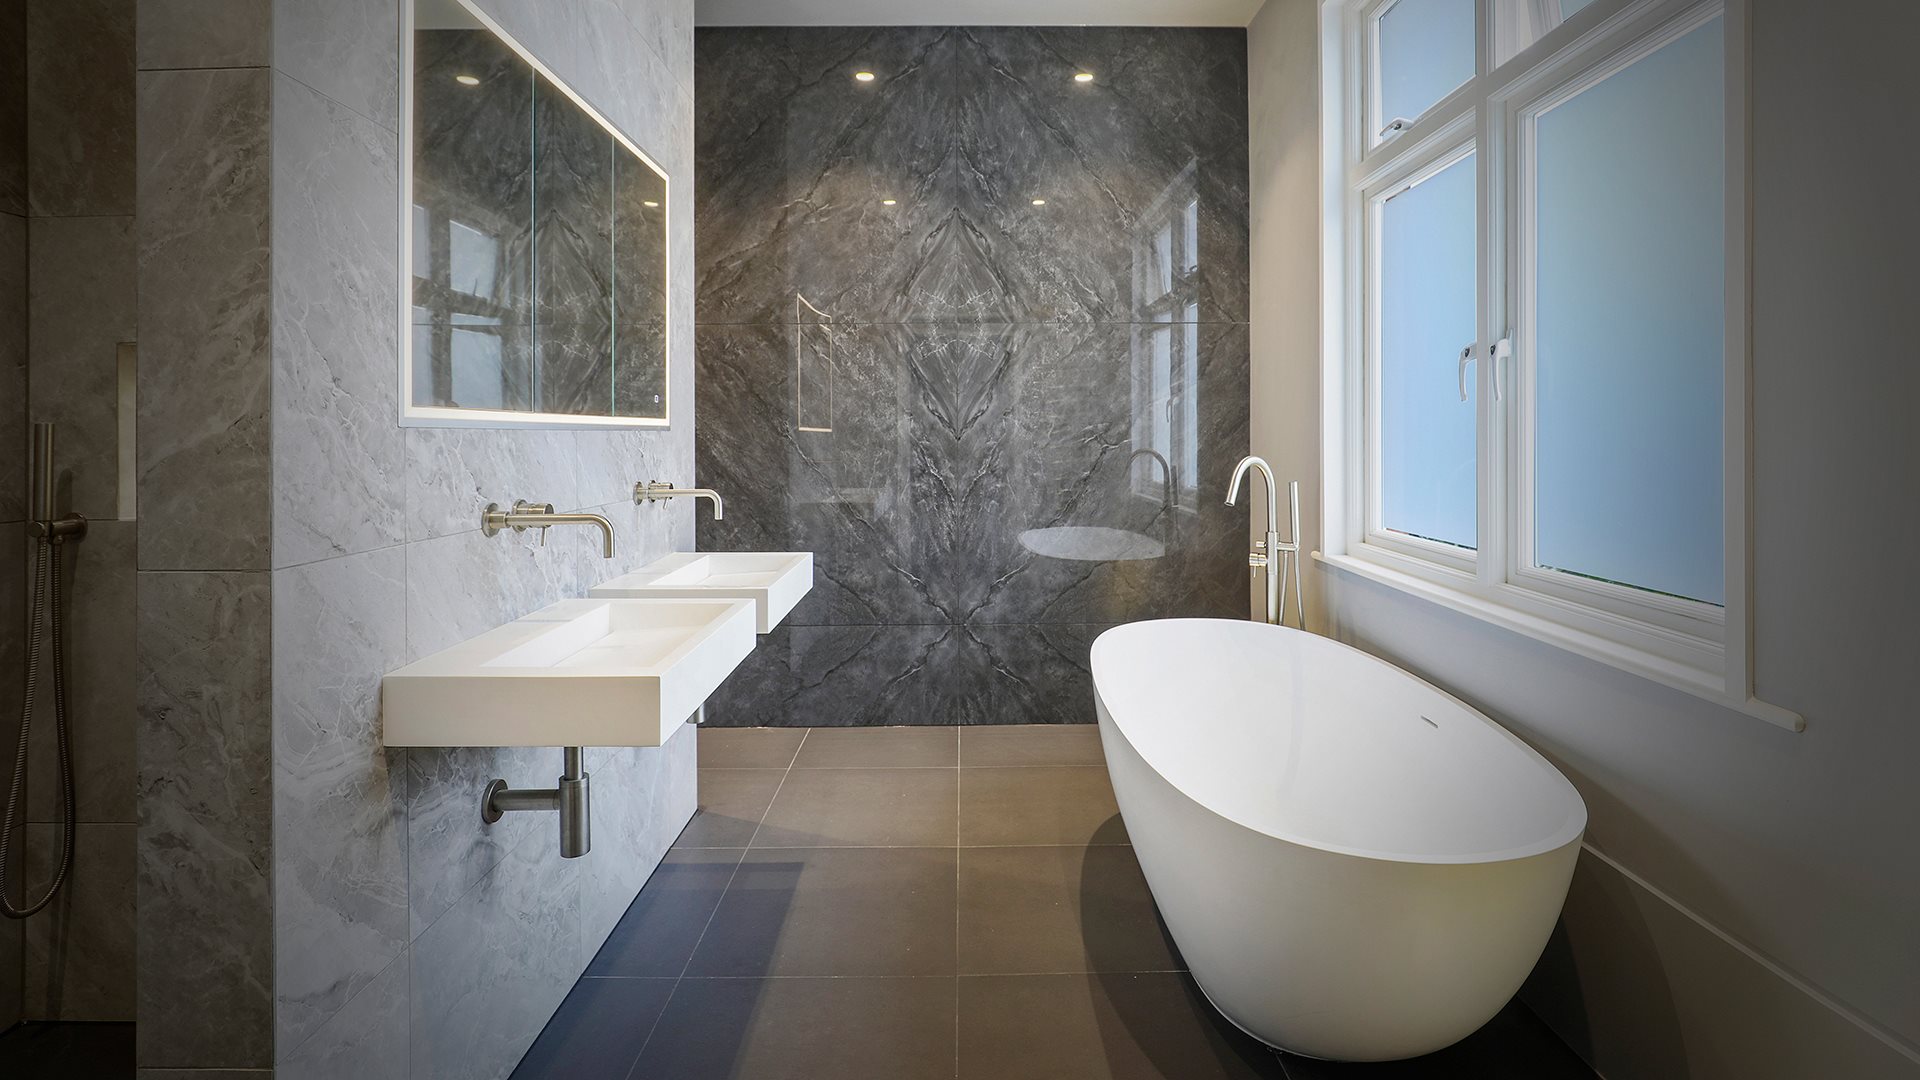 Bathroomsbydesign Nationwide Bathroom Design Specialists